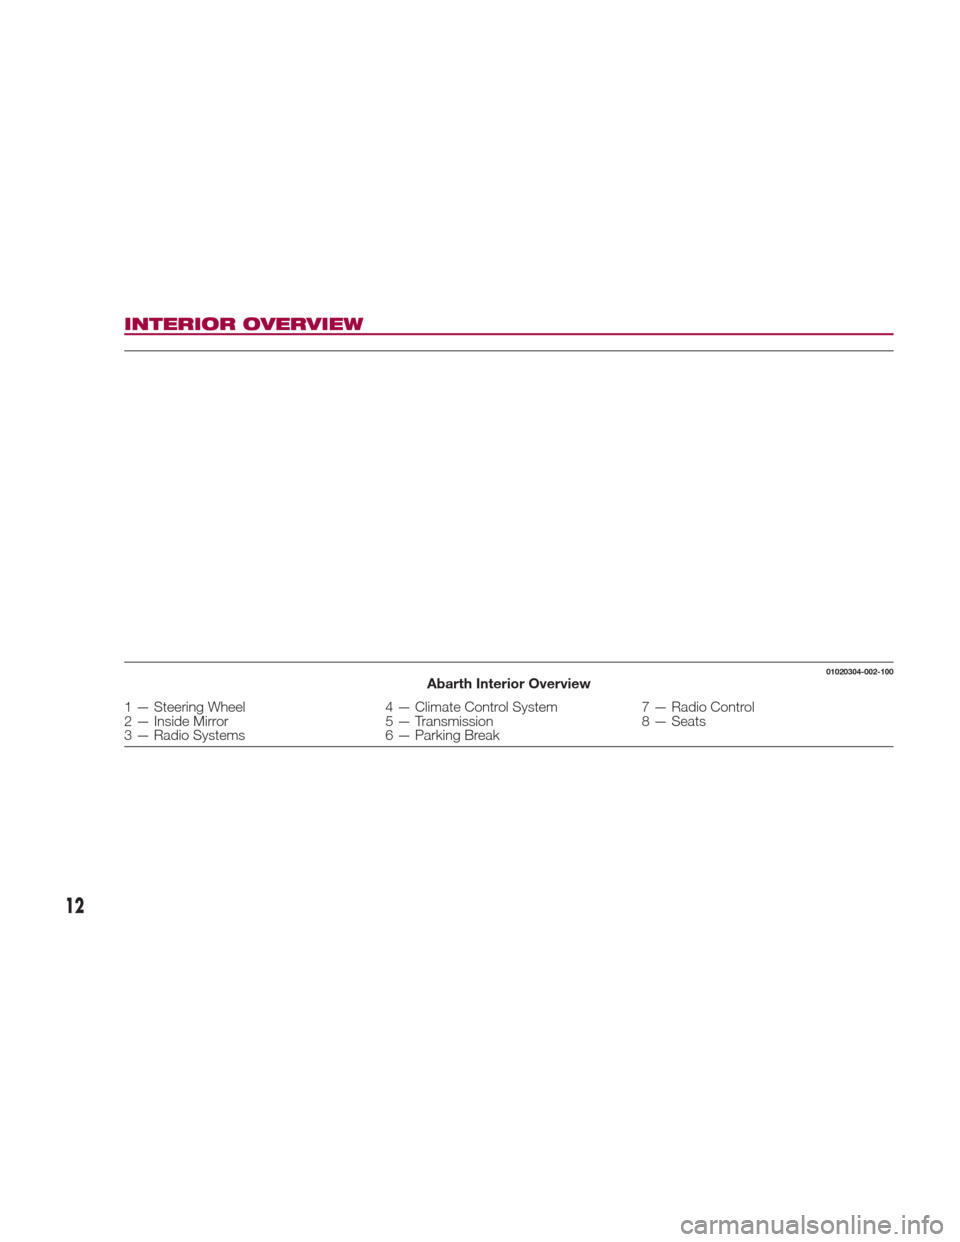 FIAT 124 SPIDER ABARTH 2017 2.G User Guide INTERIOR OVERVIEW
01020304-002-100Abarth Interior Overview
1 — Steering Wheel4 — Climate Control System7 — Radio Control
2 — Inside Mirror 5 — Transmission8 — Seats
3 — Radio Systems 6 �